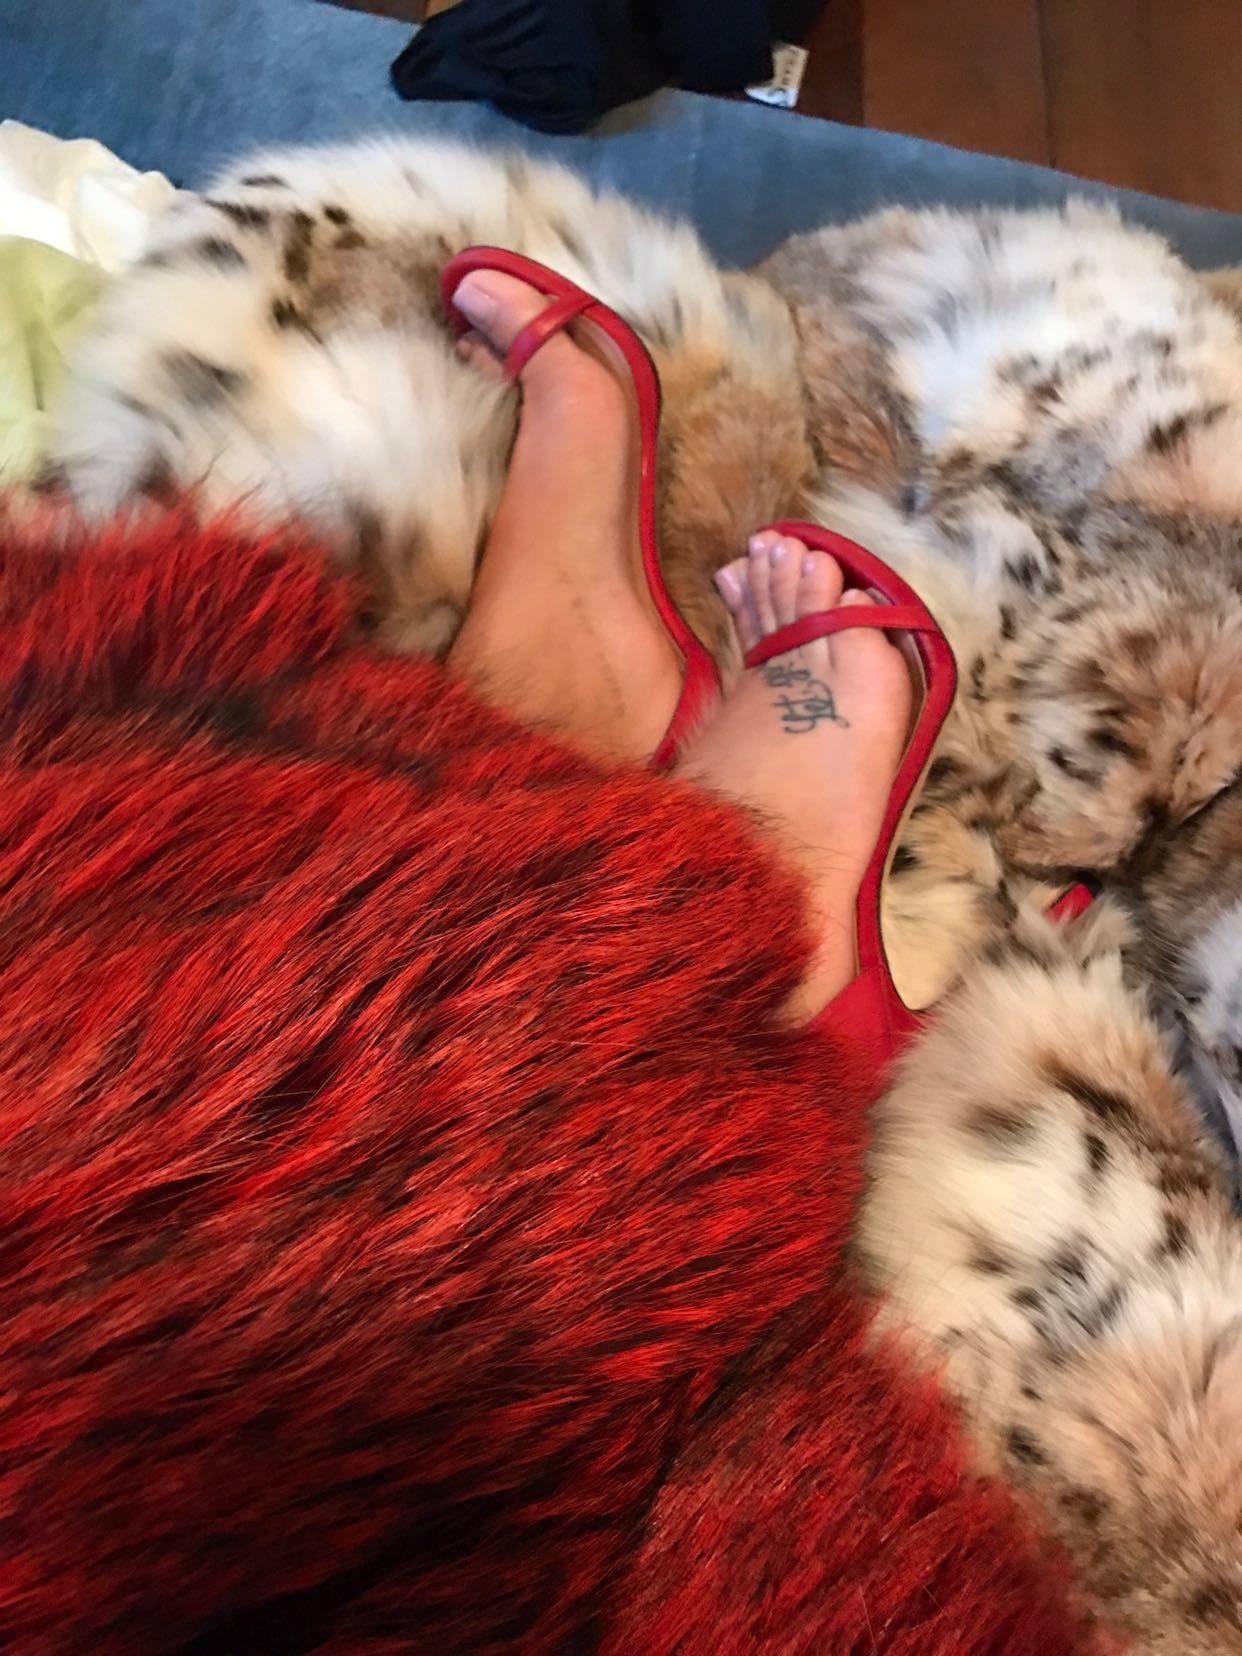 Demi Lovato Feet